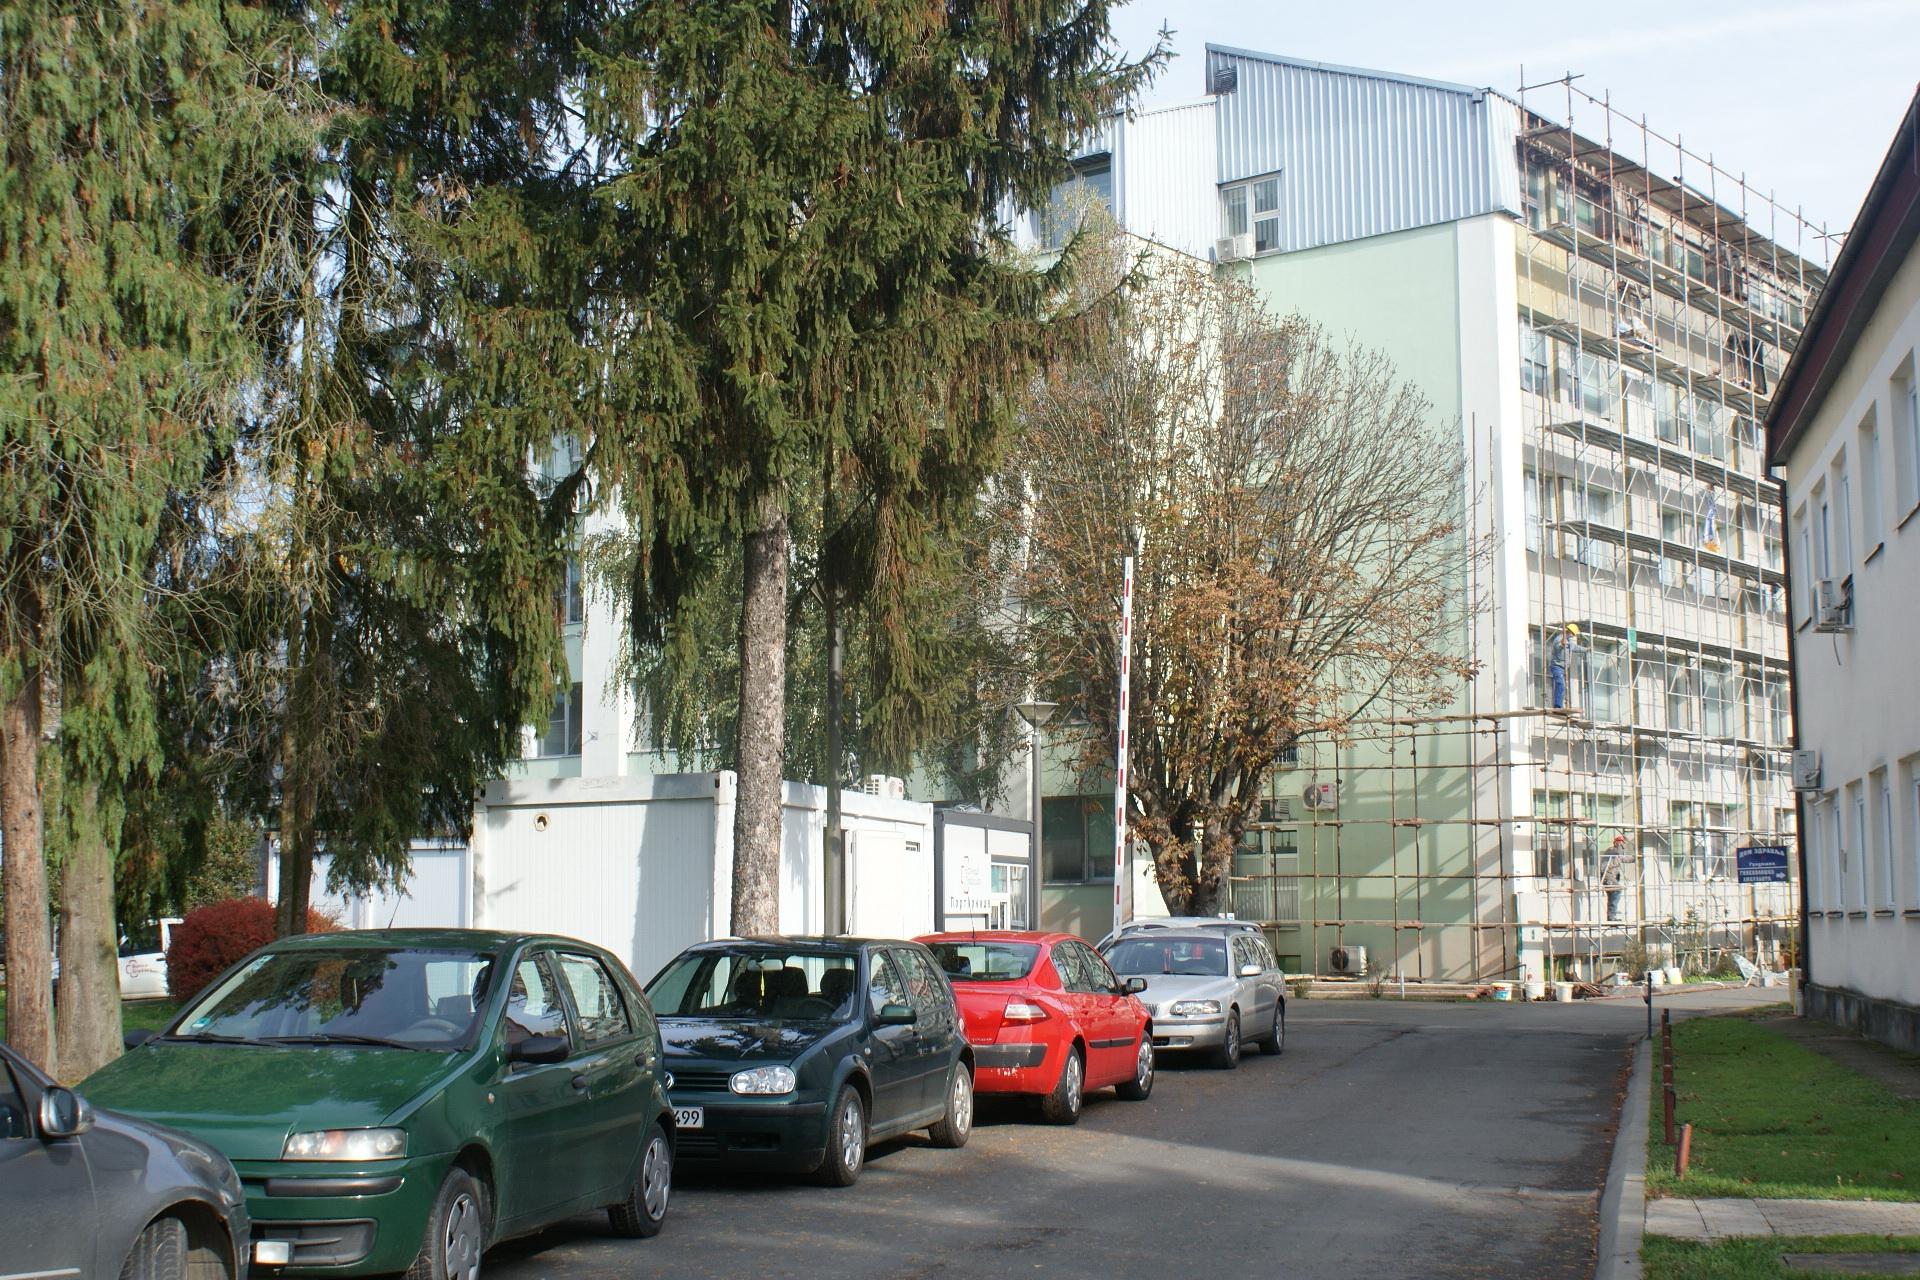 U toku je dogradnja kapaciteta i rekonstrukcija bolnice - Avaz